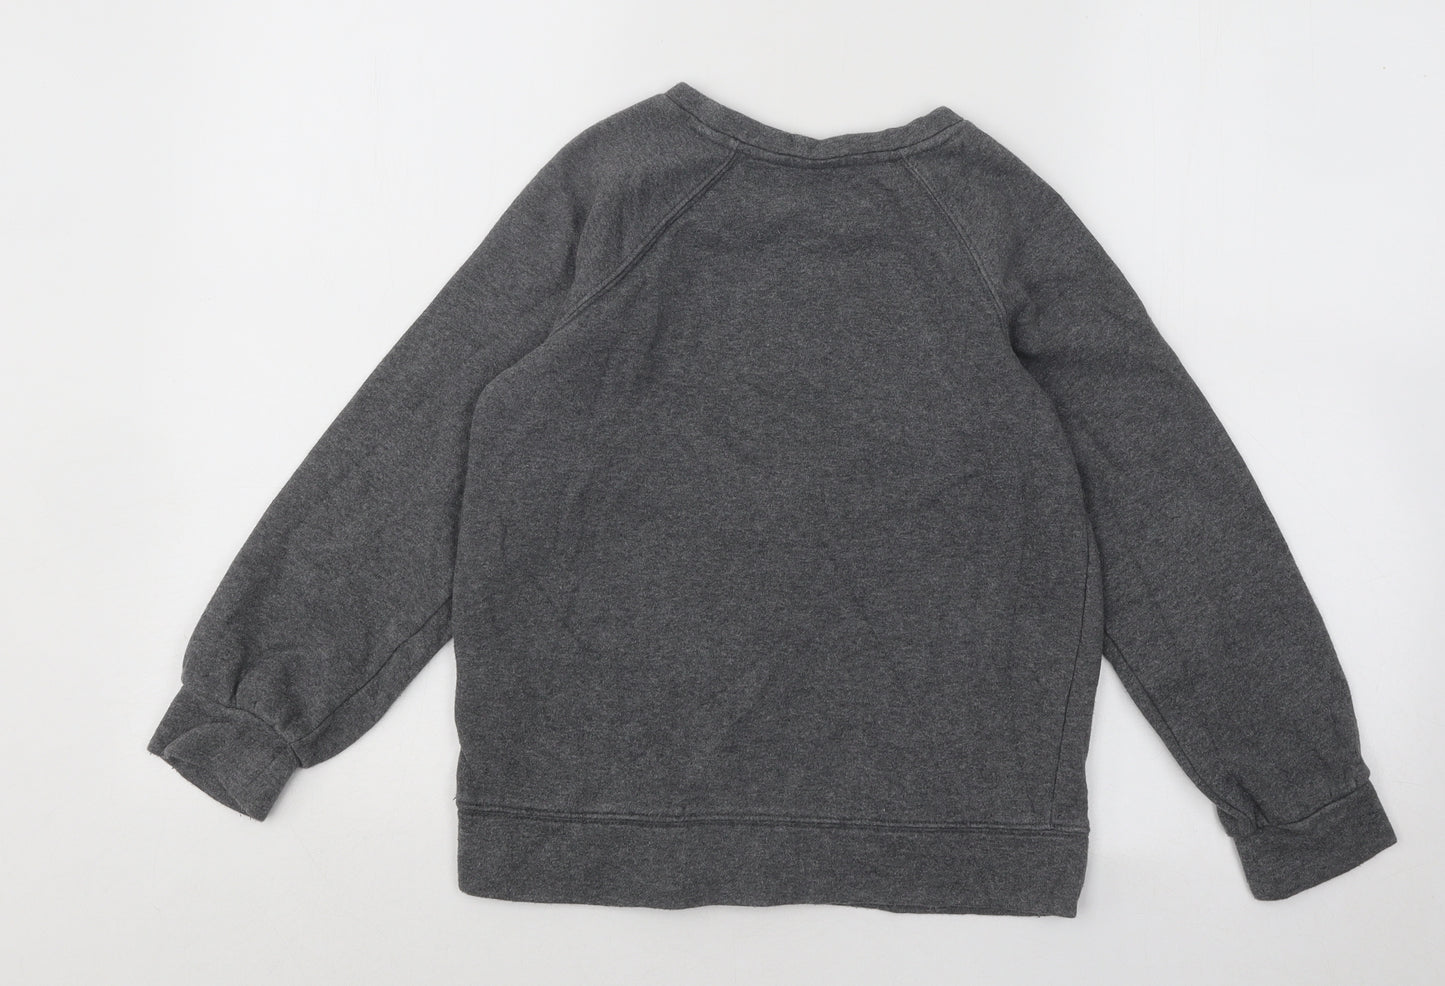 Gap Girls Grey Cotton Pullover Sweatshirt Size 8 Years Pullover - Donut